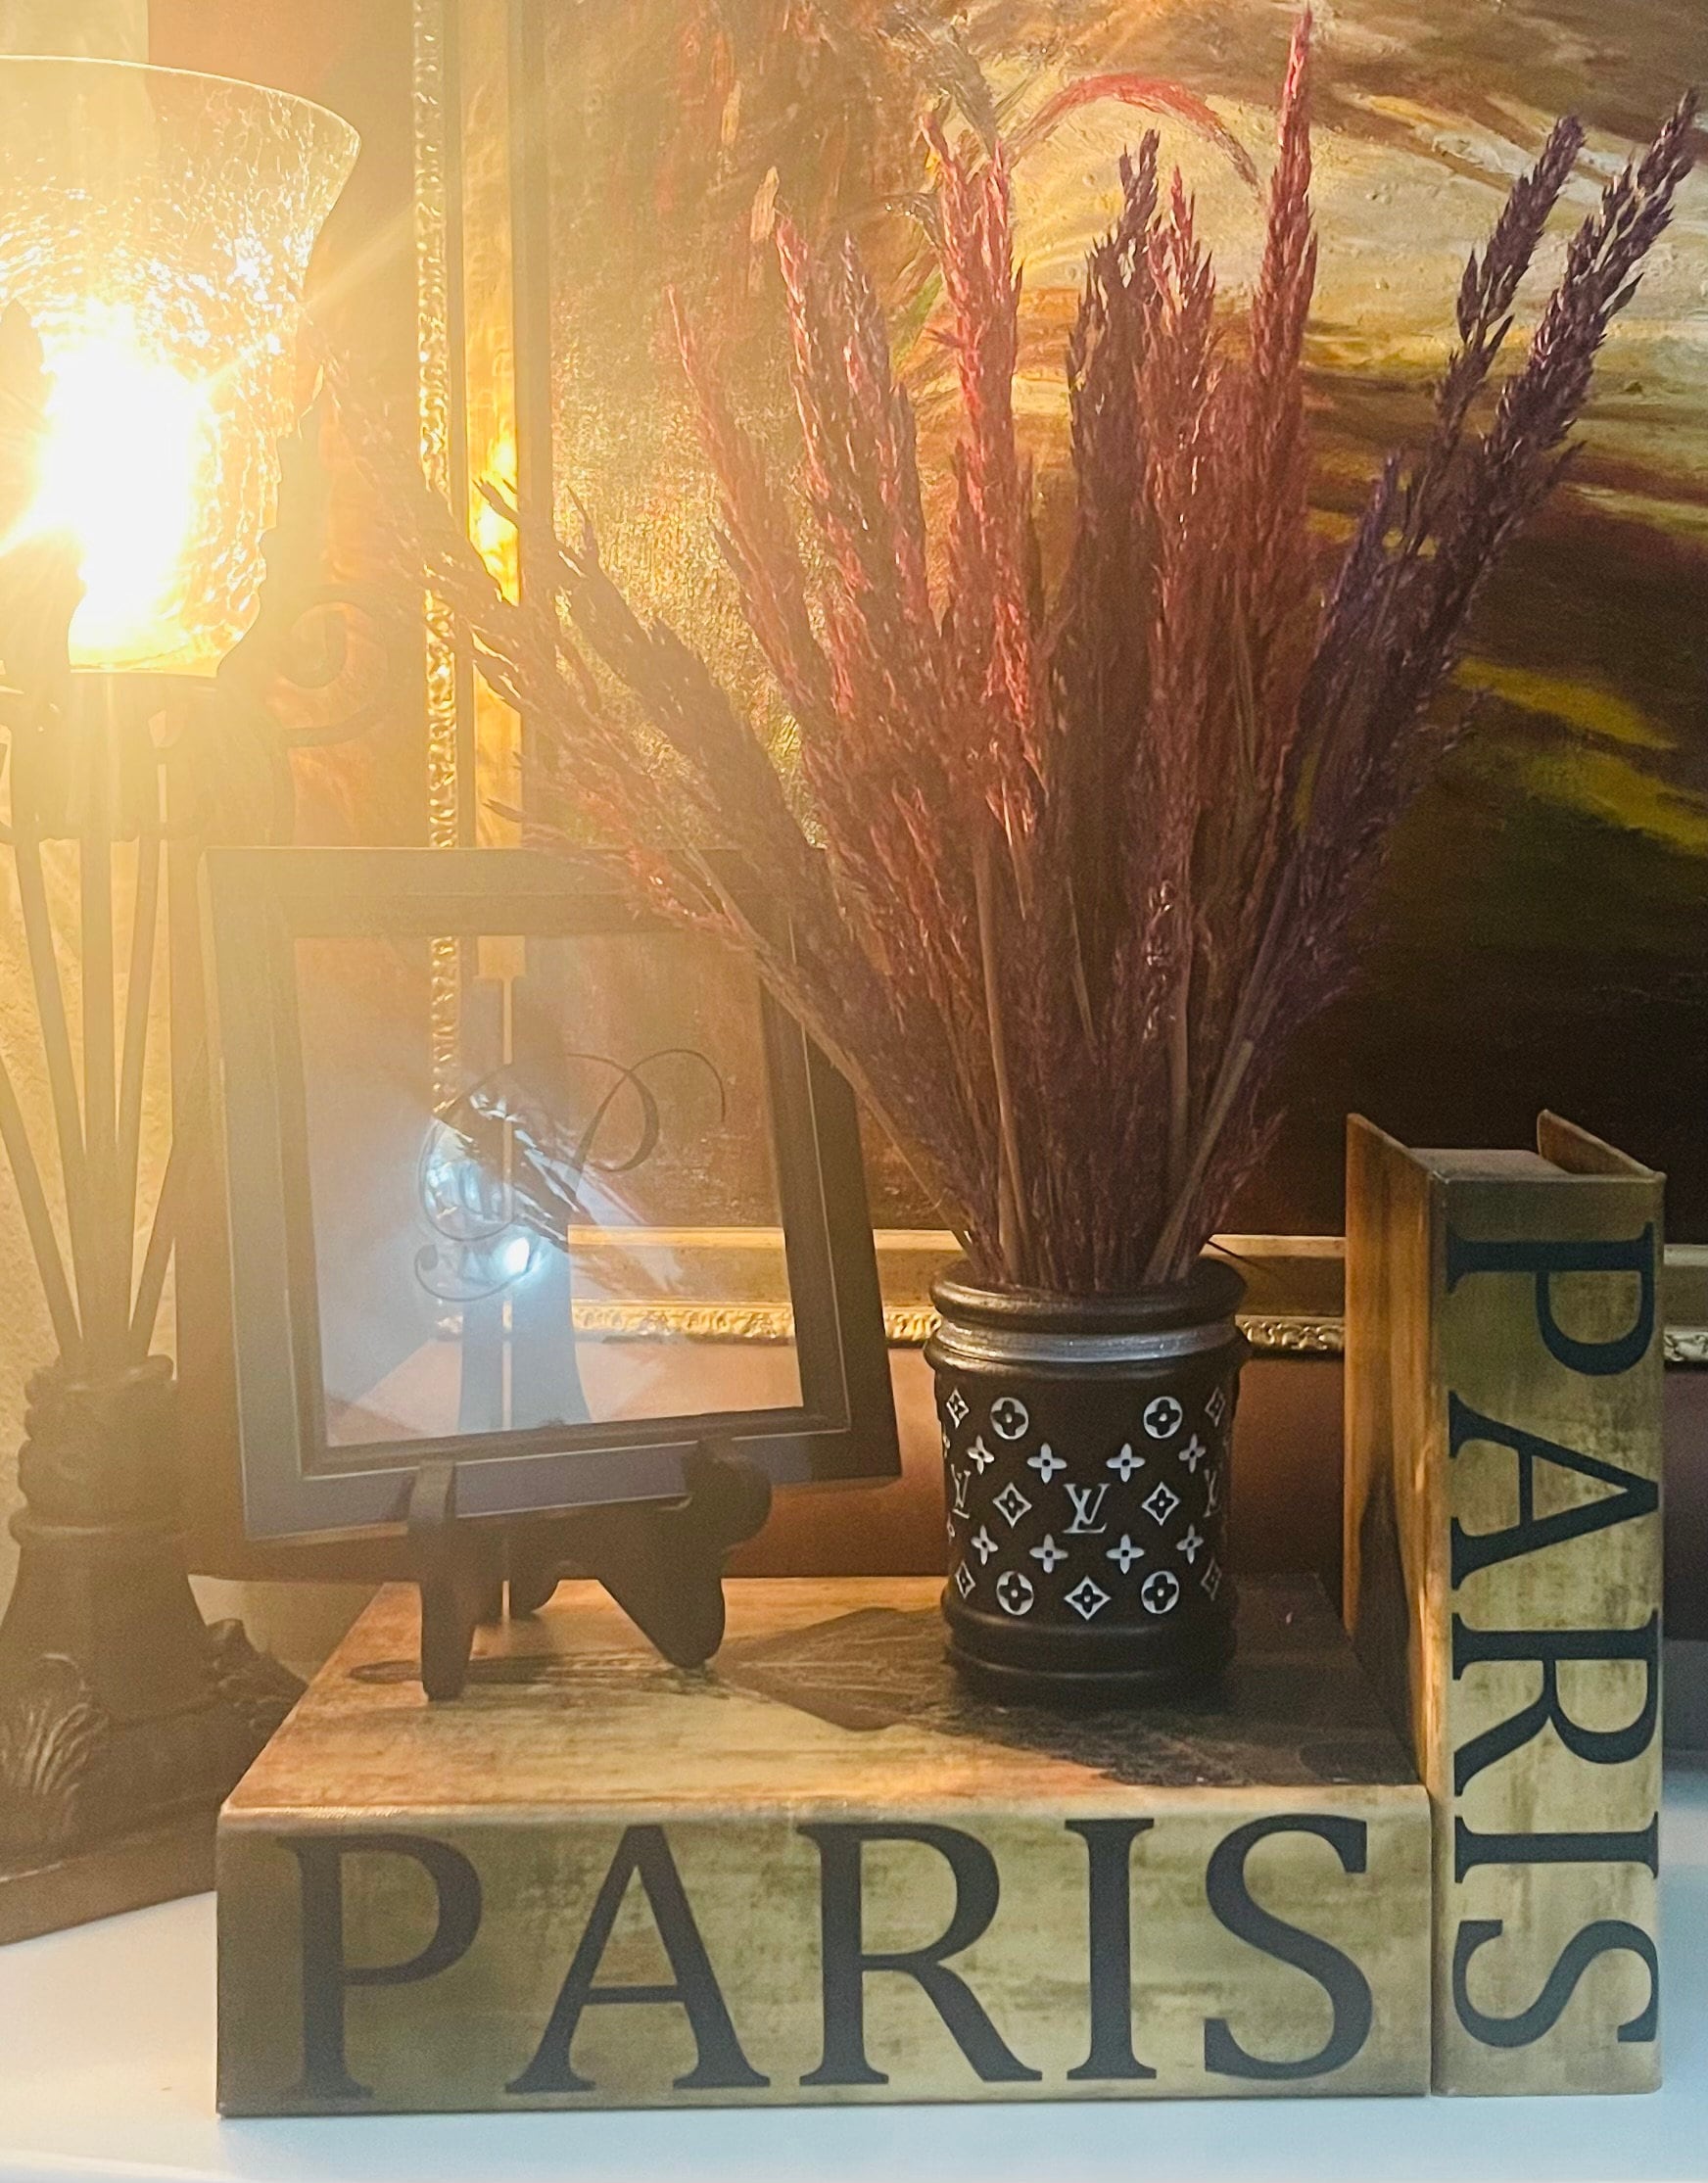 Prestige LV Bag Vase Level up your flower arrangements with our luxurious  bag vase. A vase for those with great taste. Material:…